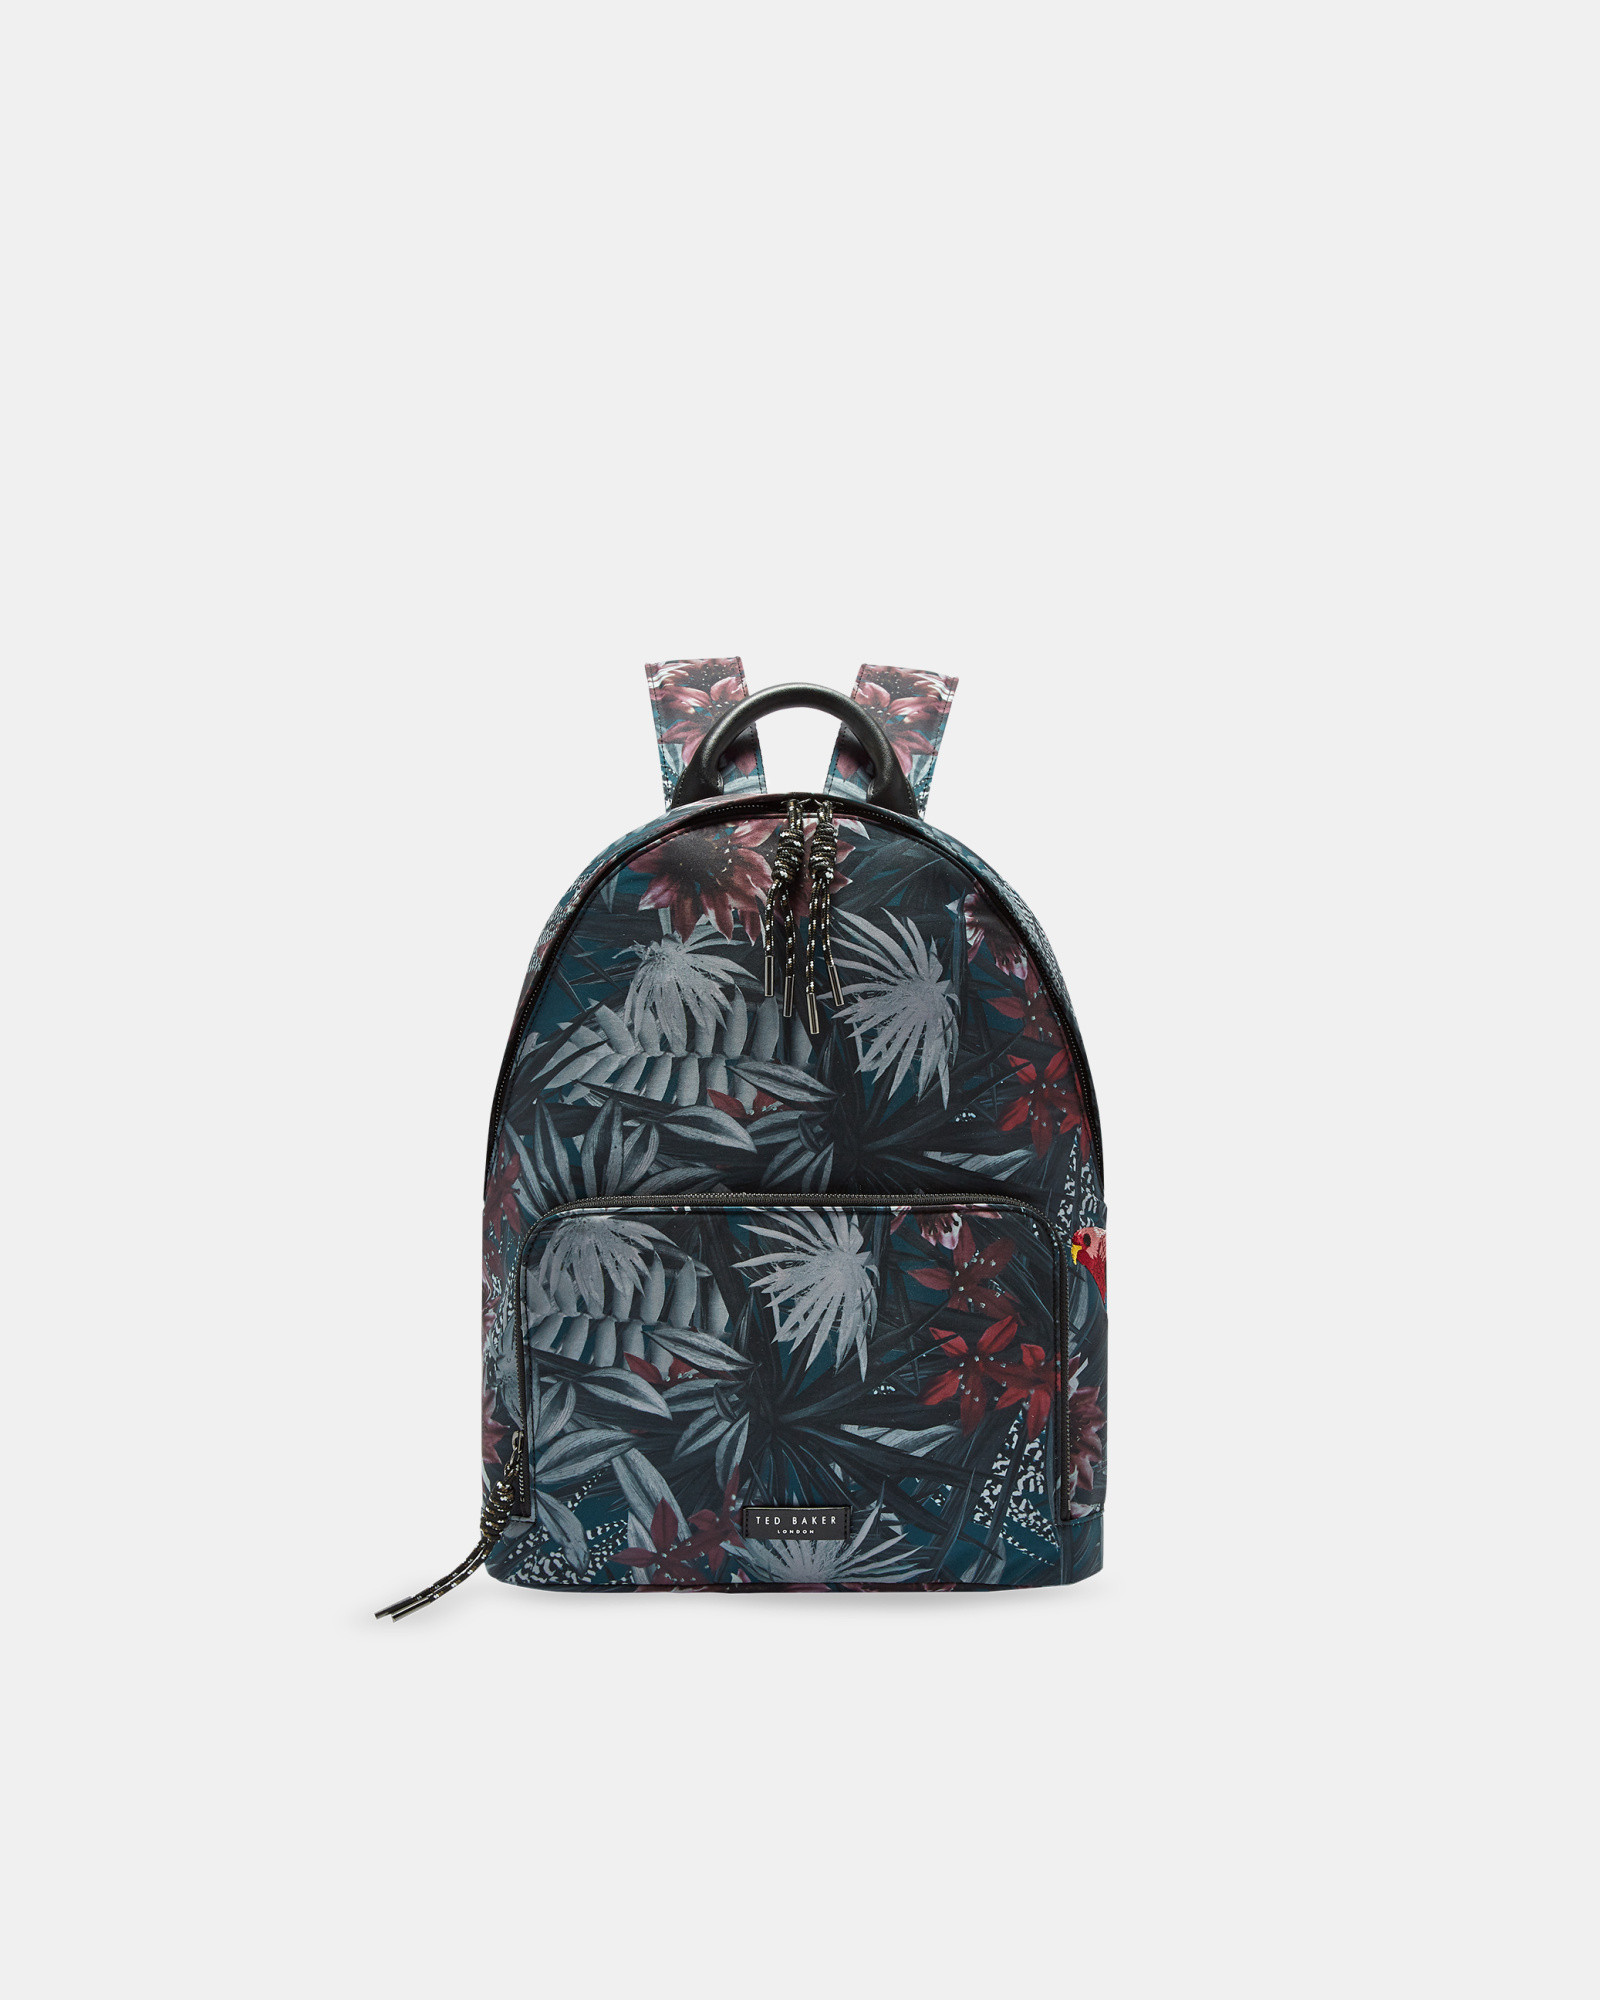 FETHERD Embroidered floral backpack